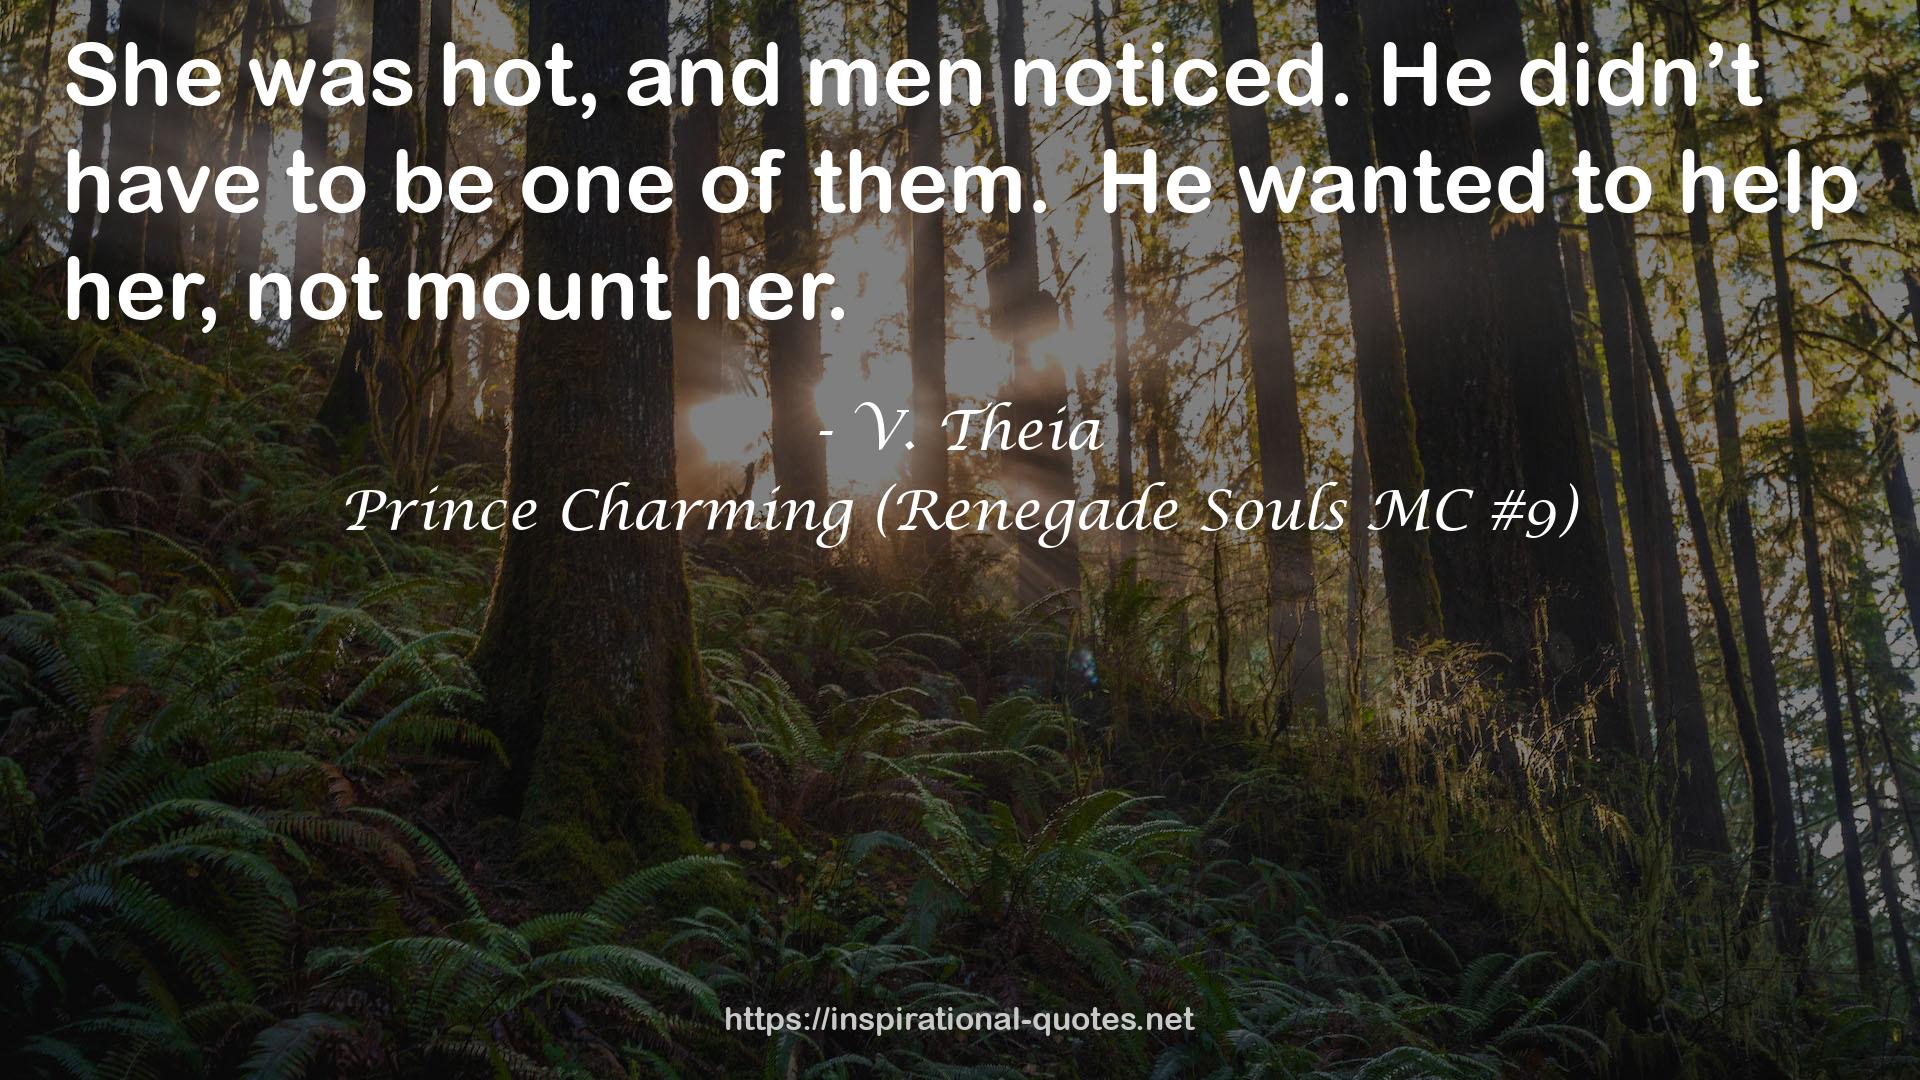 Prince Charming (Renegade Souls MC #9) QUOTES